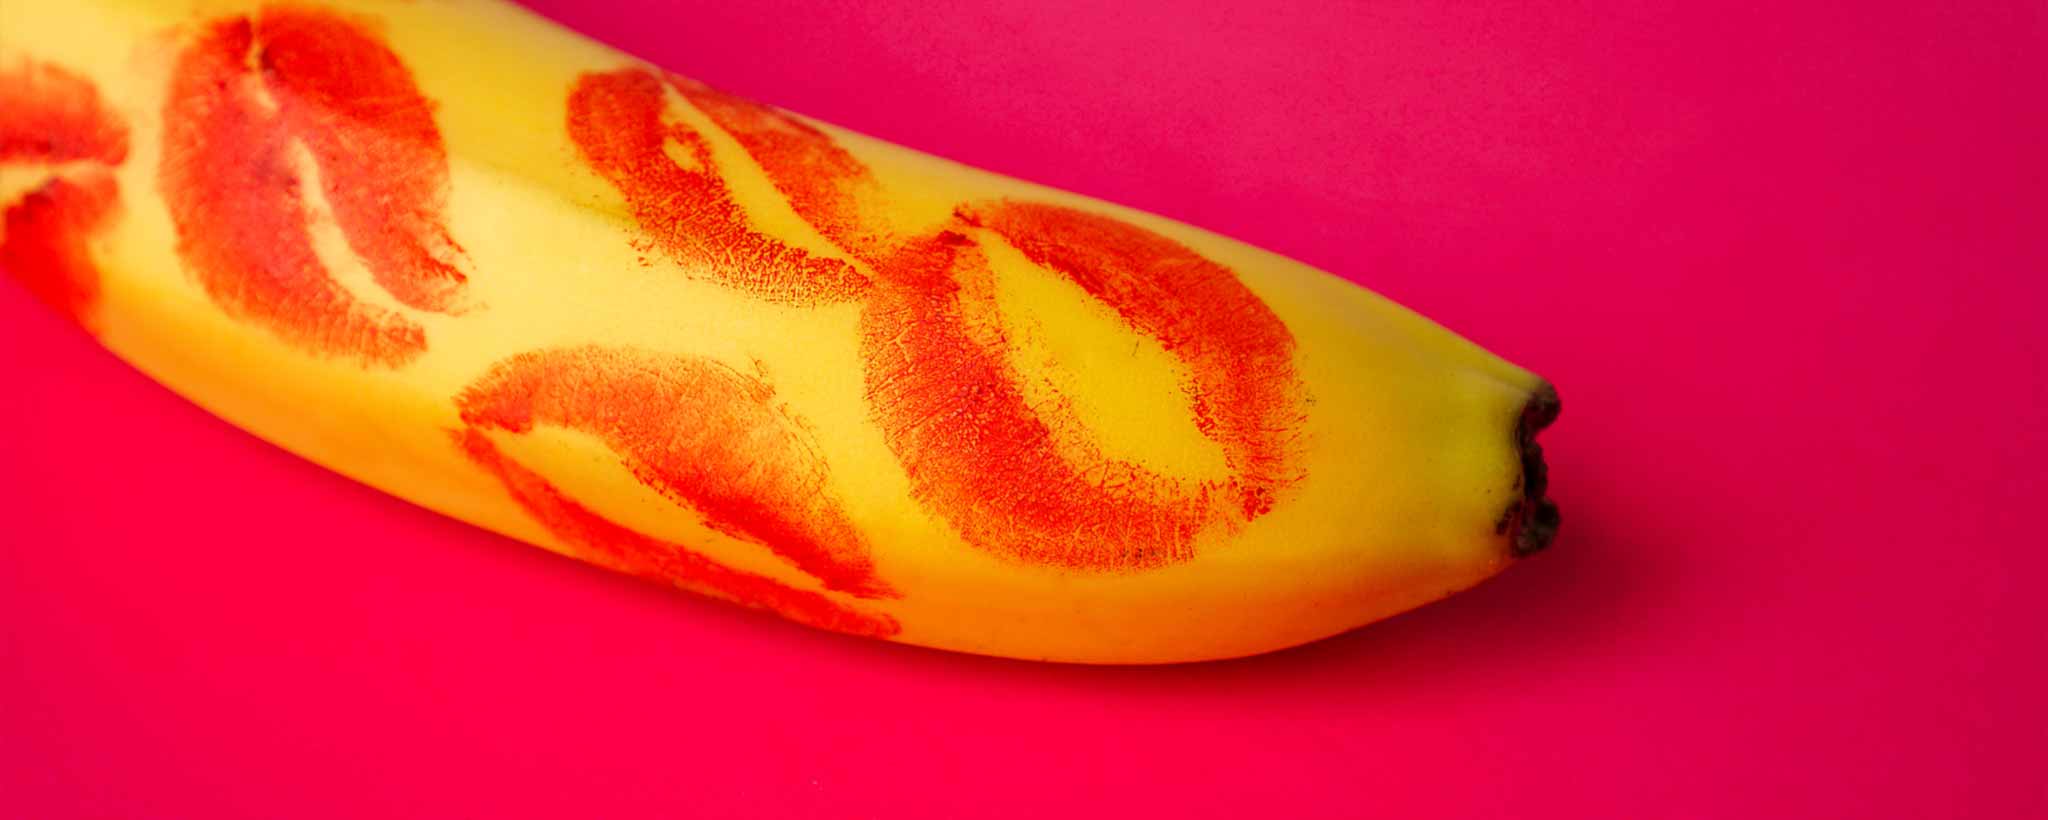 'Red lipstick kisses on yellow banana'